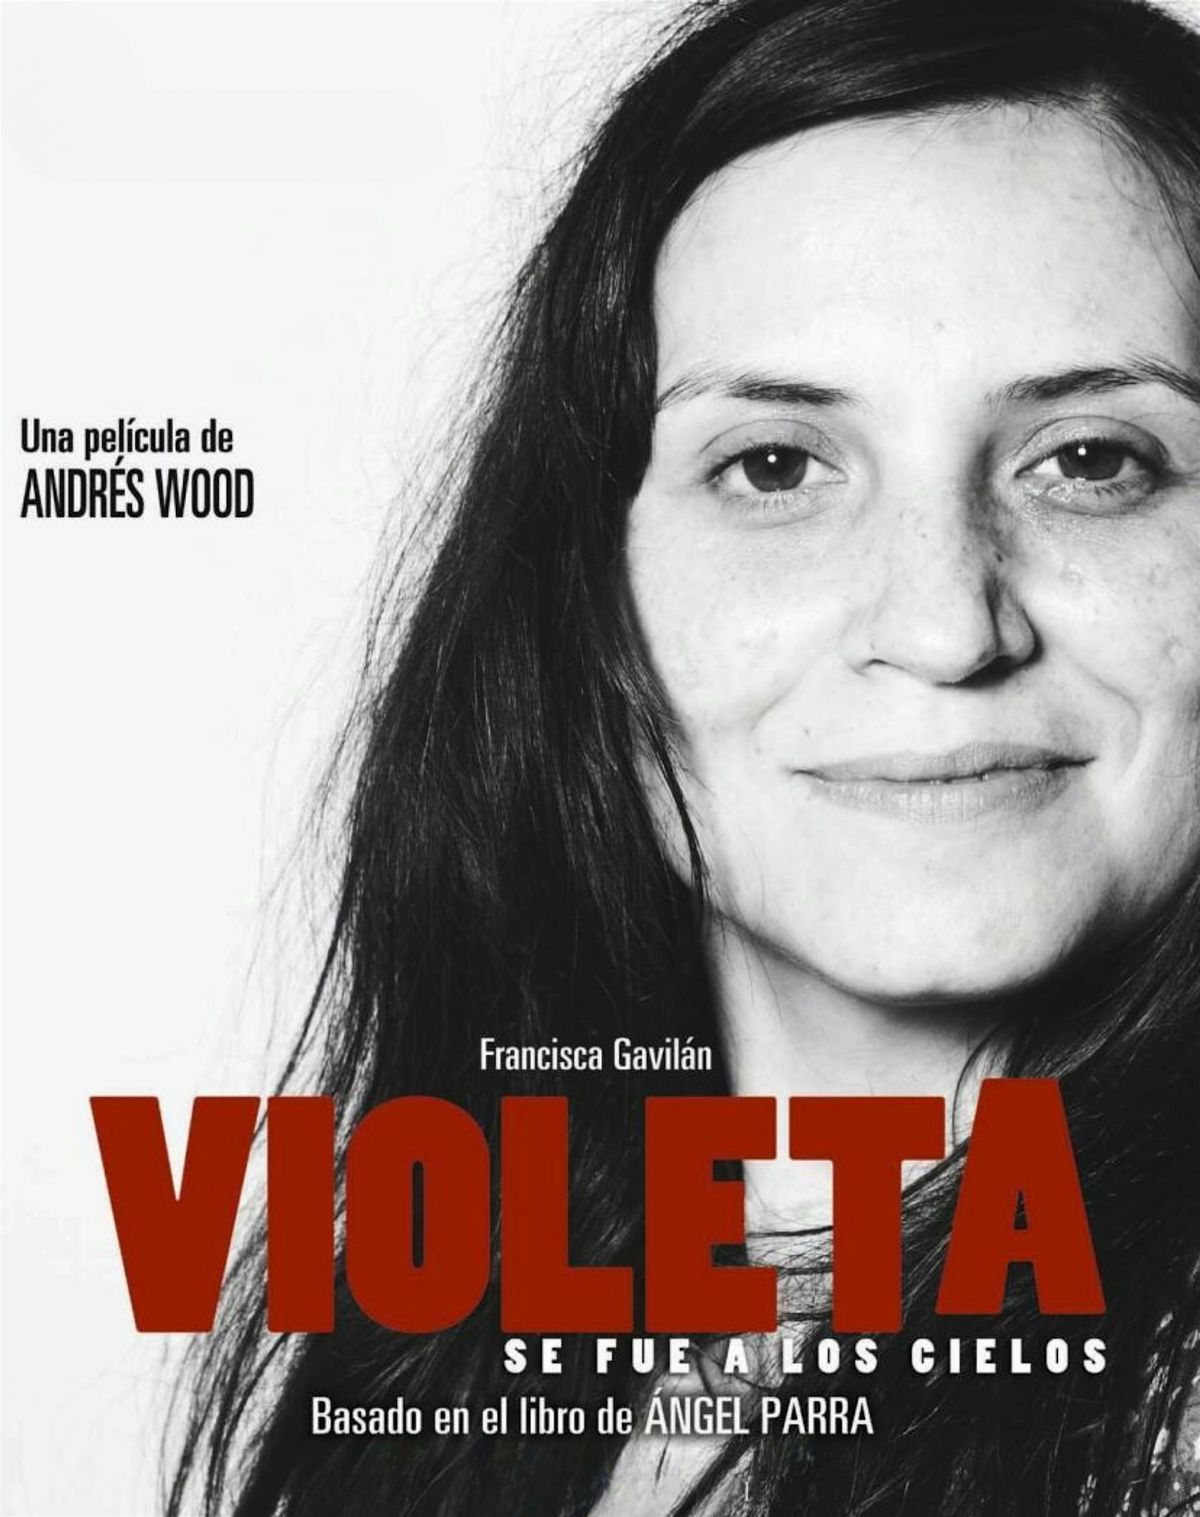 Chile\u00b4's Film Screening "Violeta se fue a los cielos" by Andr\u00e9s Wood